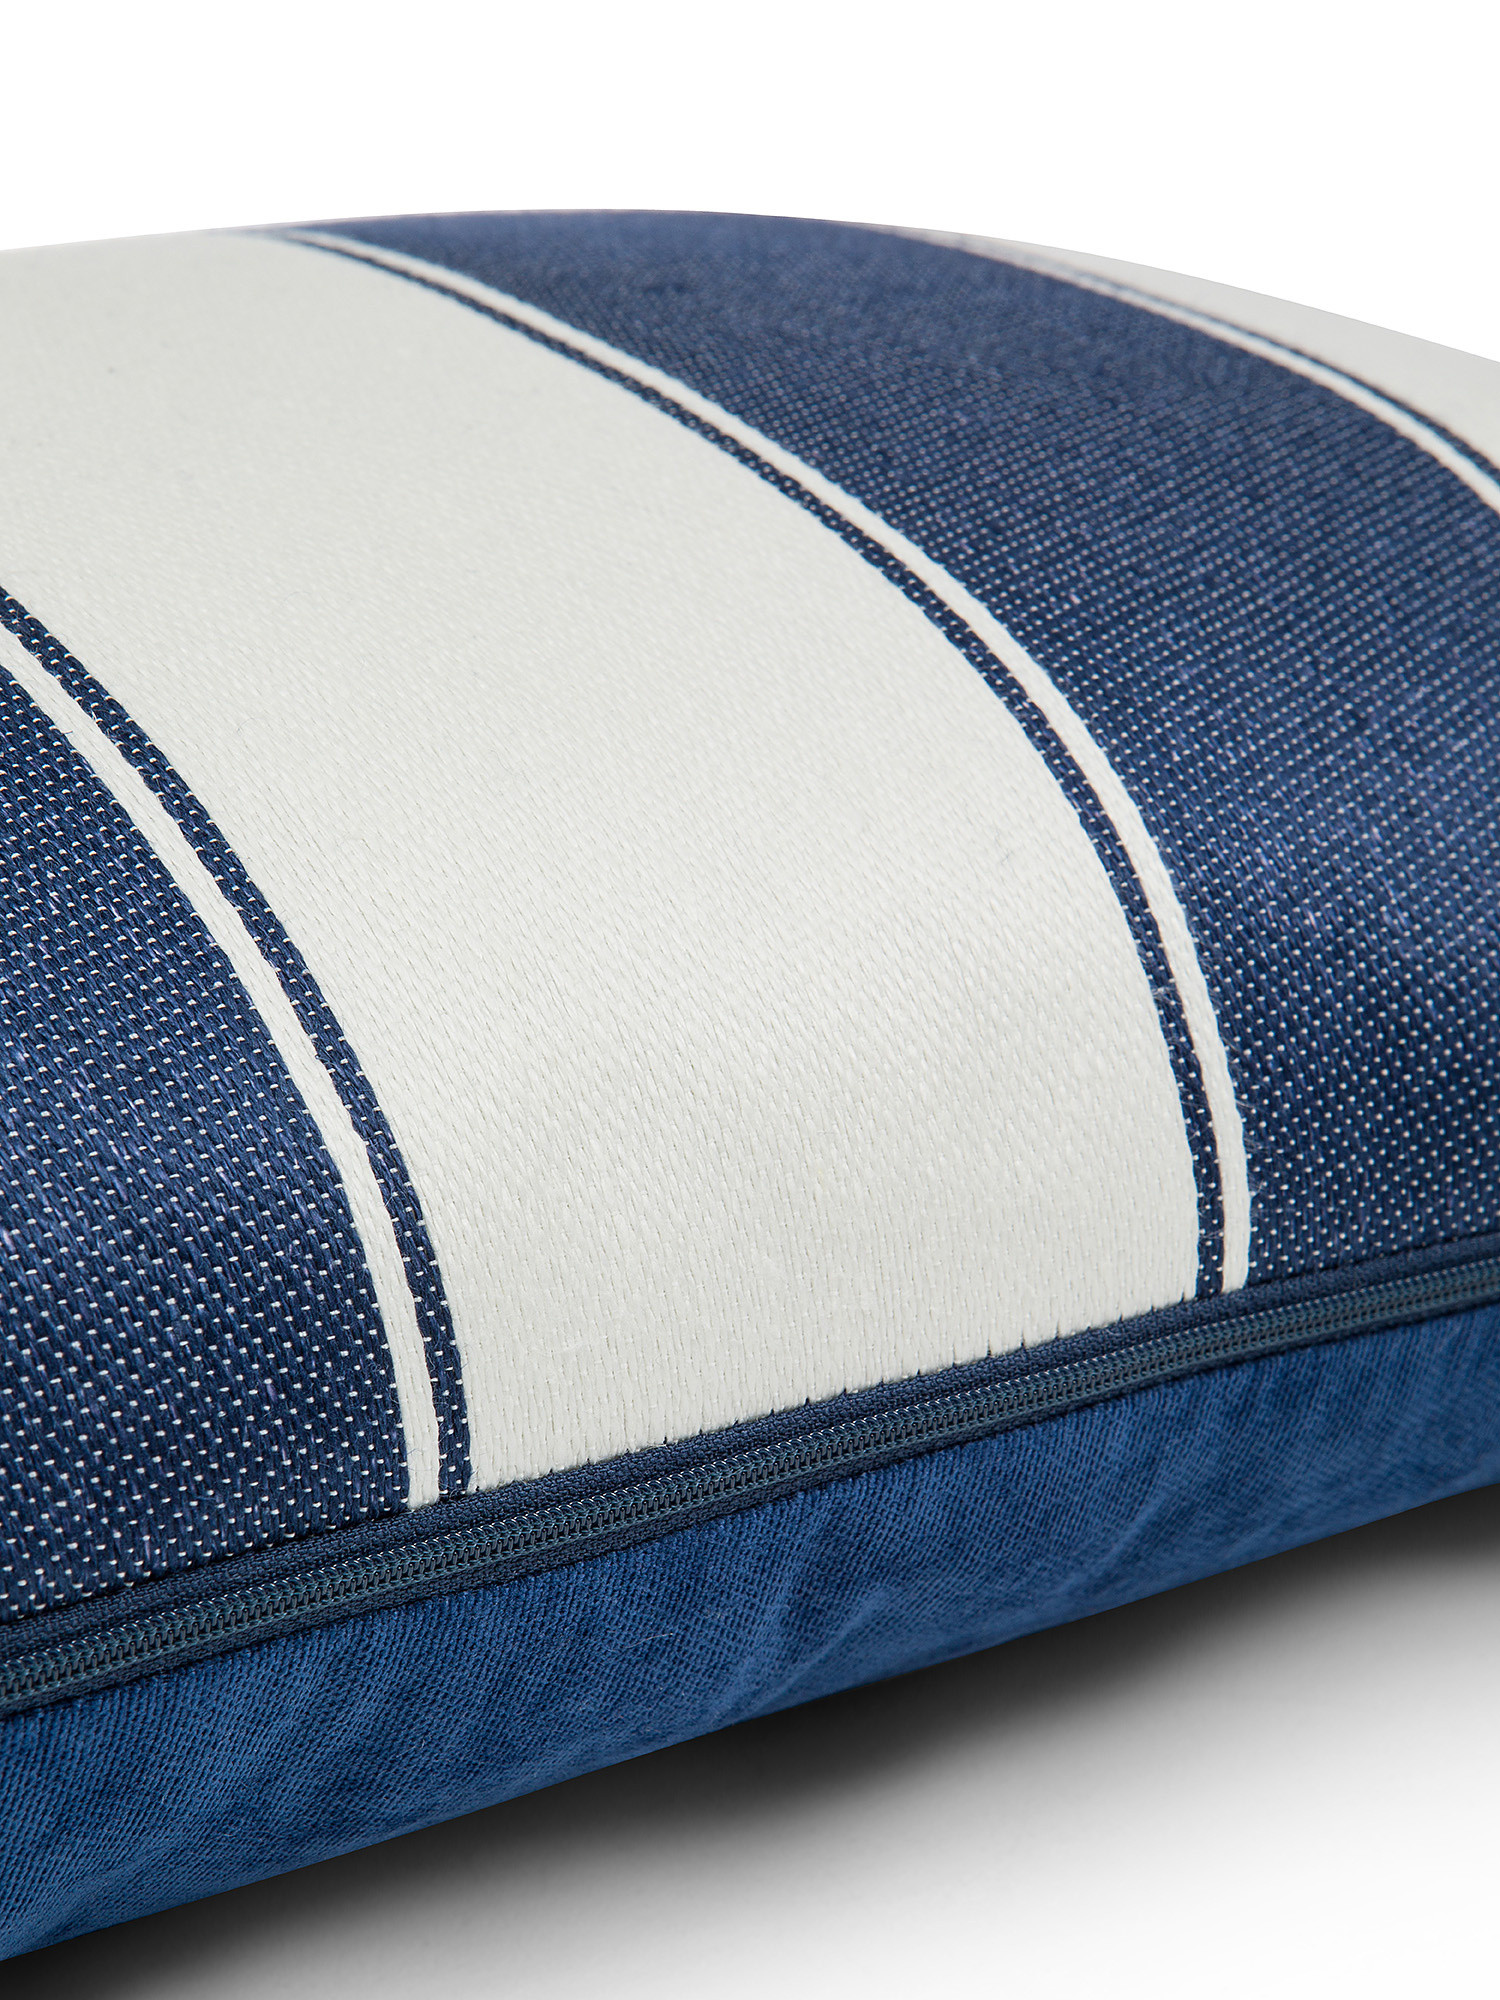 Cuscino 35x55 cm in cotone e lino, Bianco/Blu, large image number 2